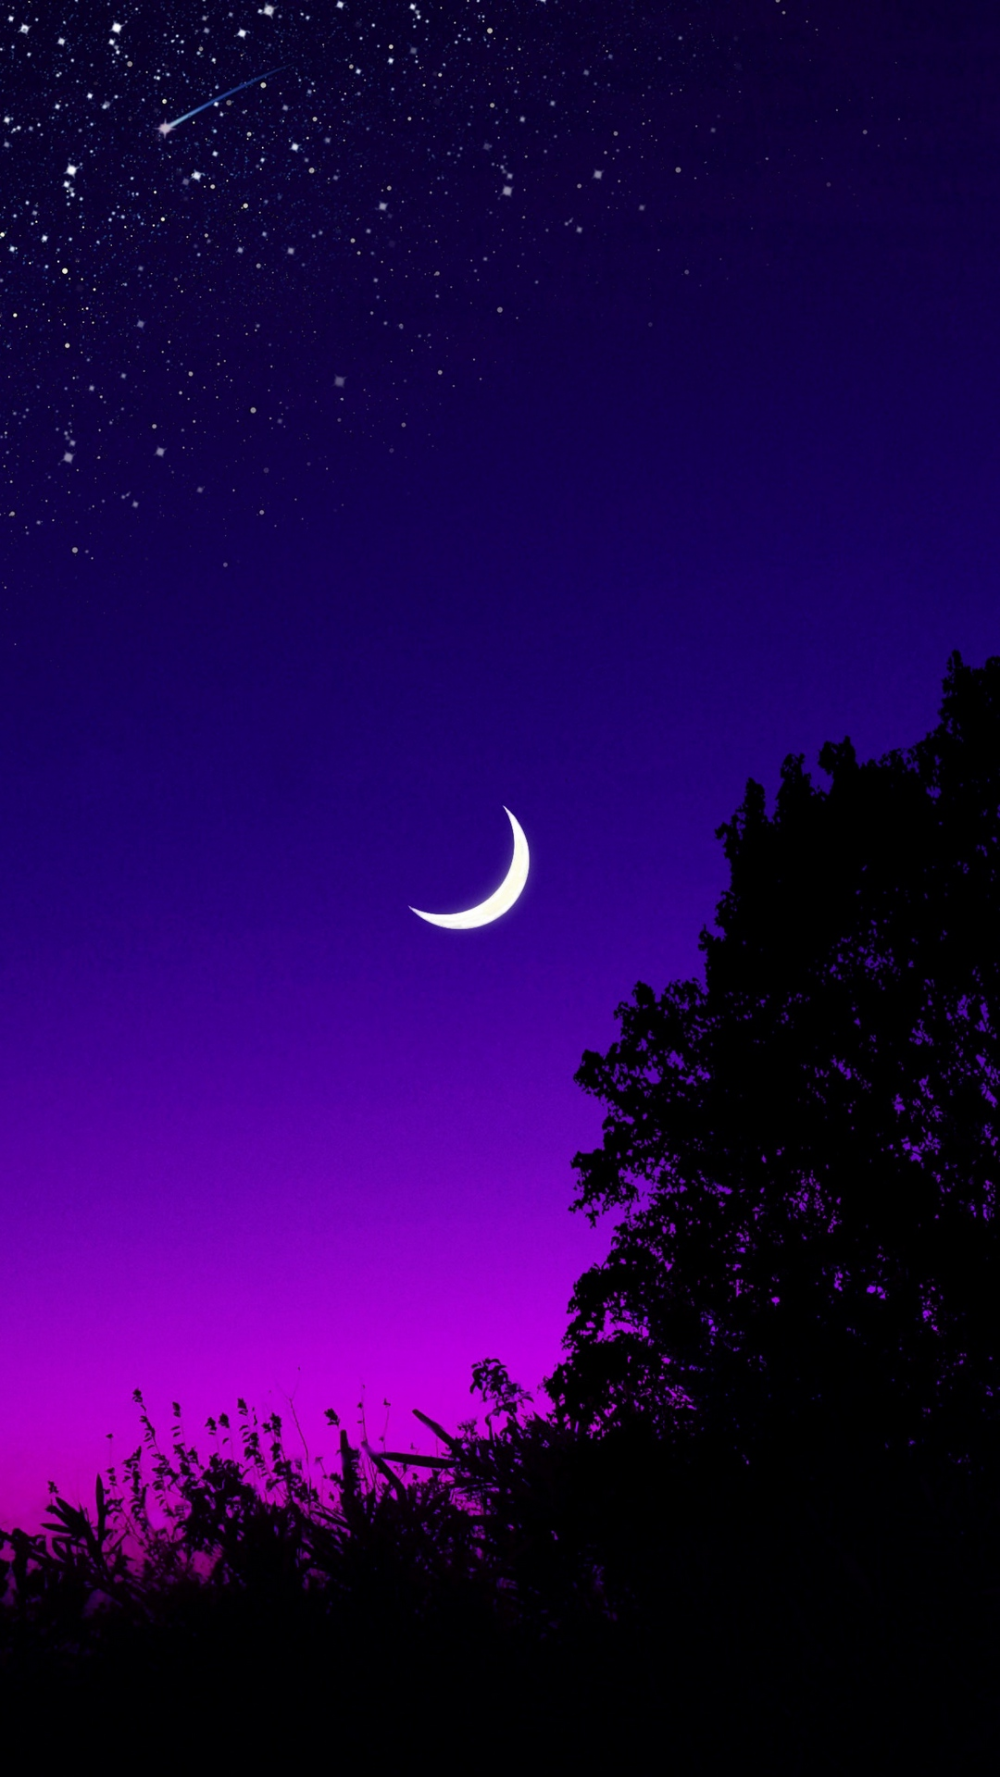 moon, tree, starry sky, night,. Scenery wallpaper, Starry night wallpaper, Night sky wallpaper